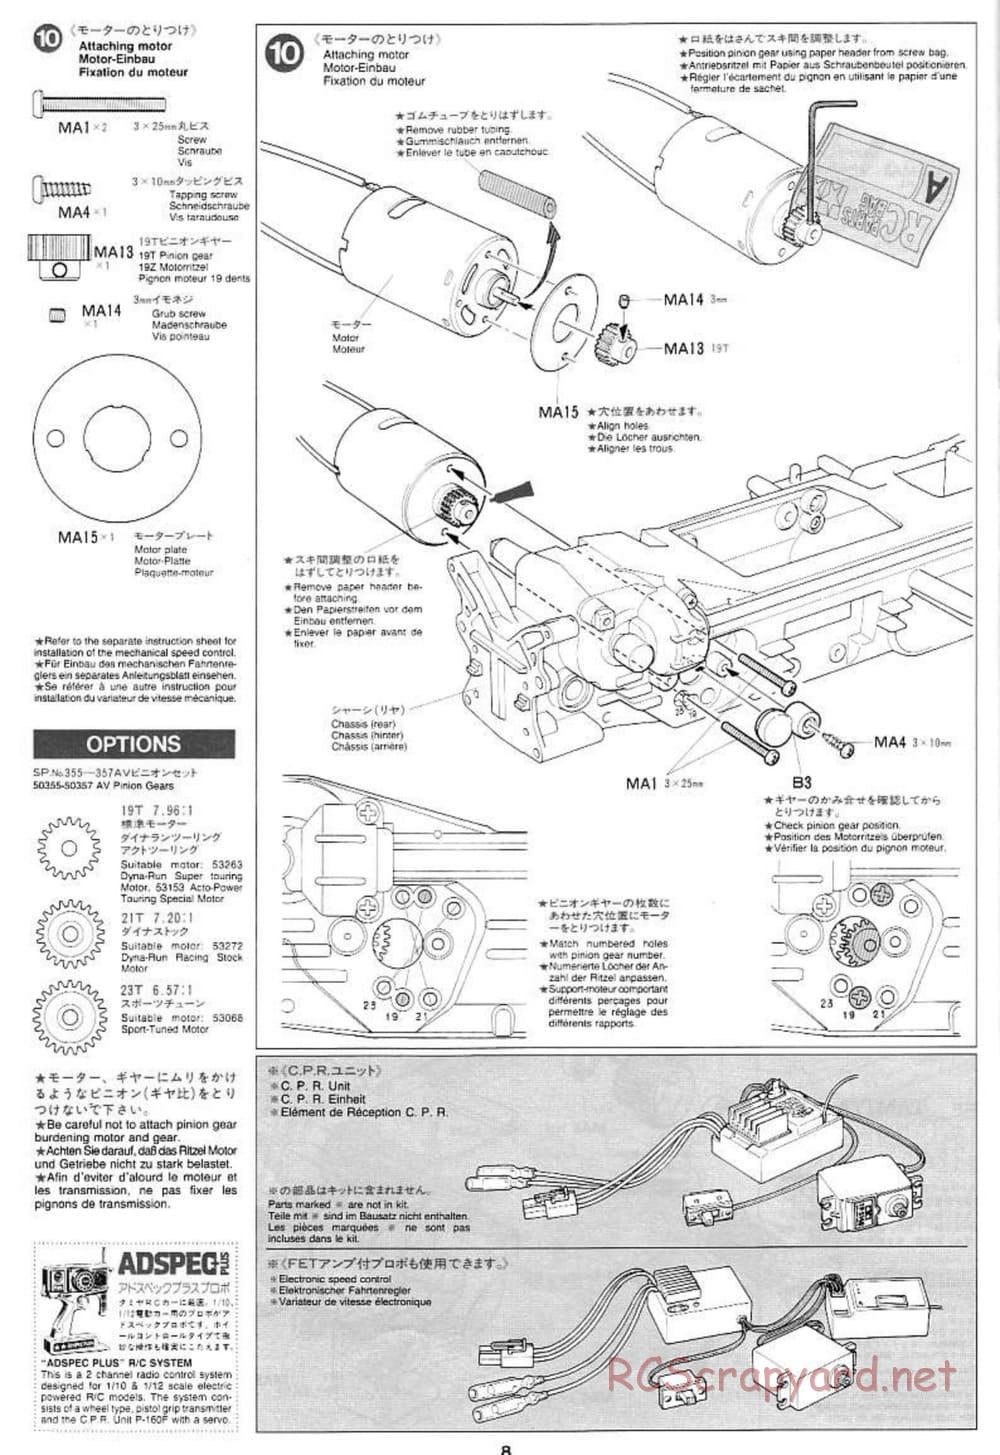 Tamiya - Ford Escort WRC - TL-01 Chassis - Manual - Page 8